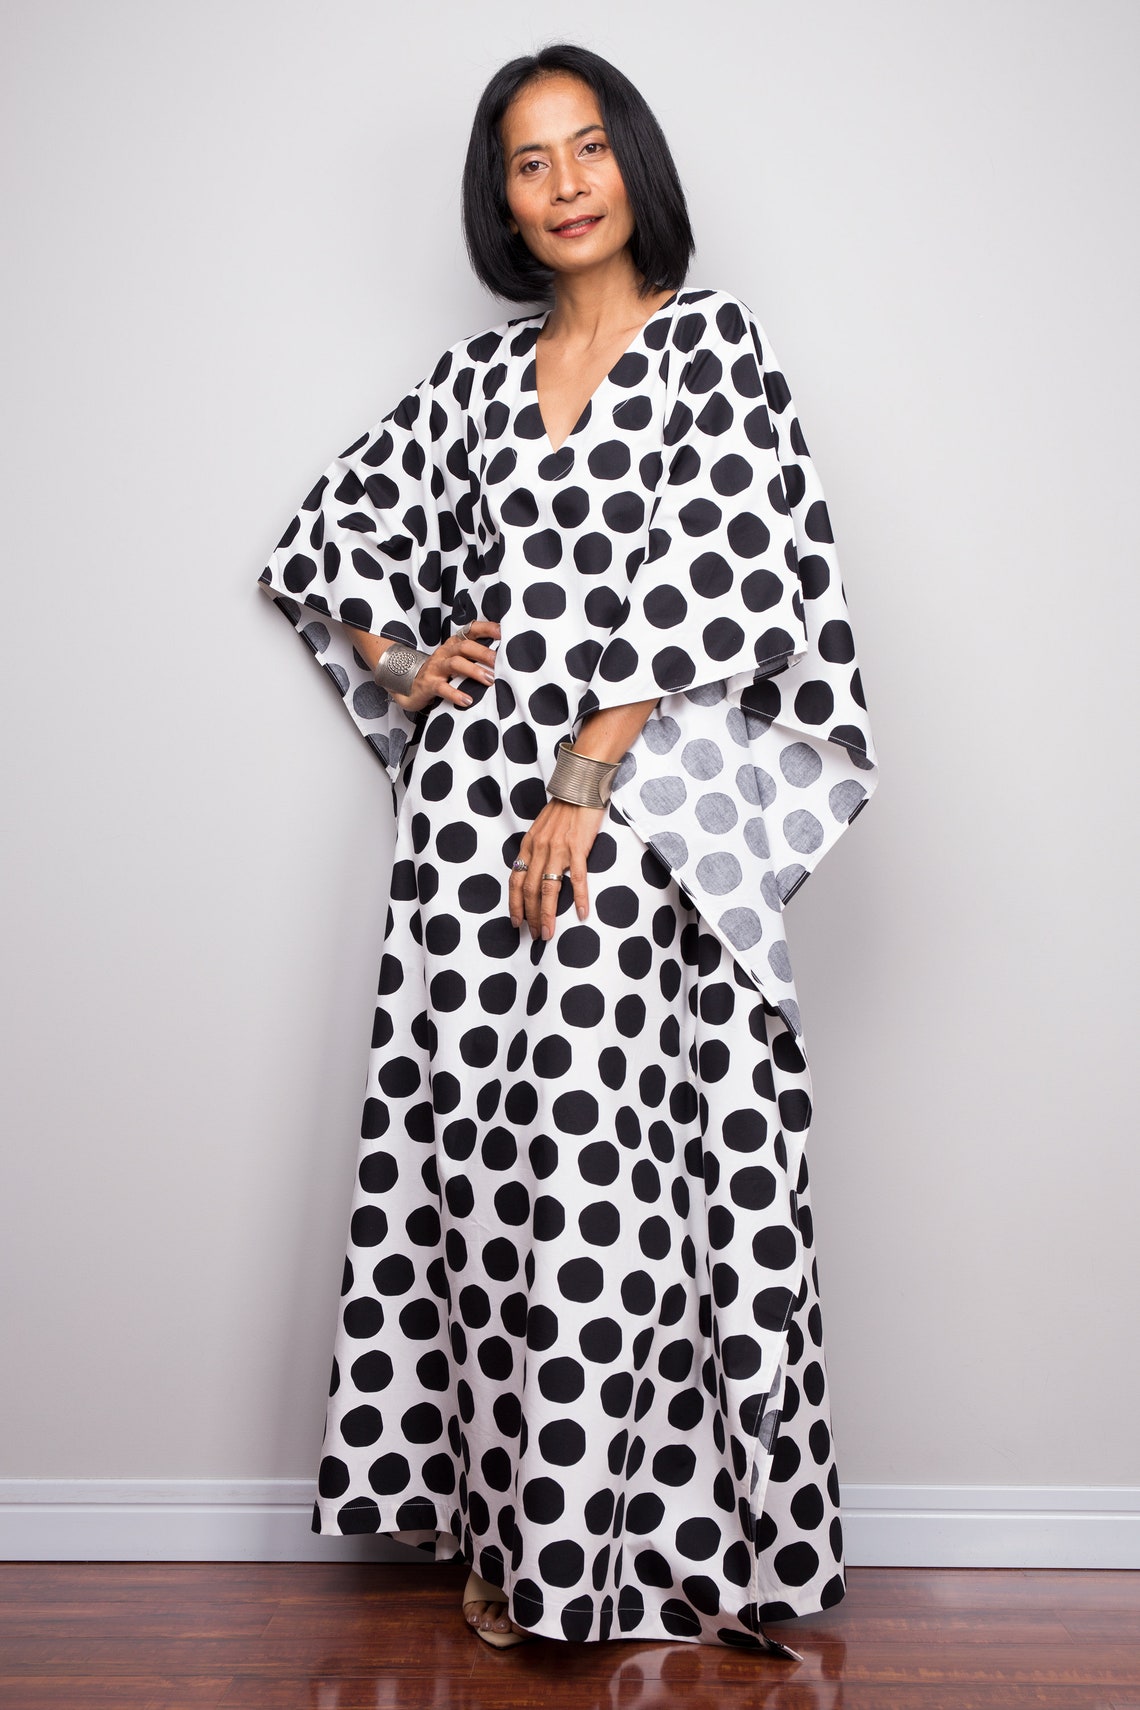 Polka dot dress Kaftan Dotted Maxi Dress black white dress | Etsy